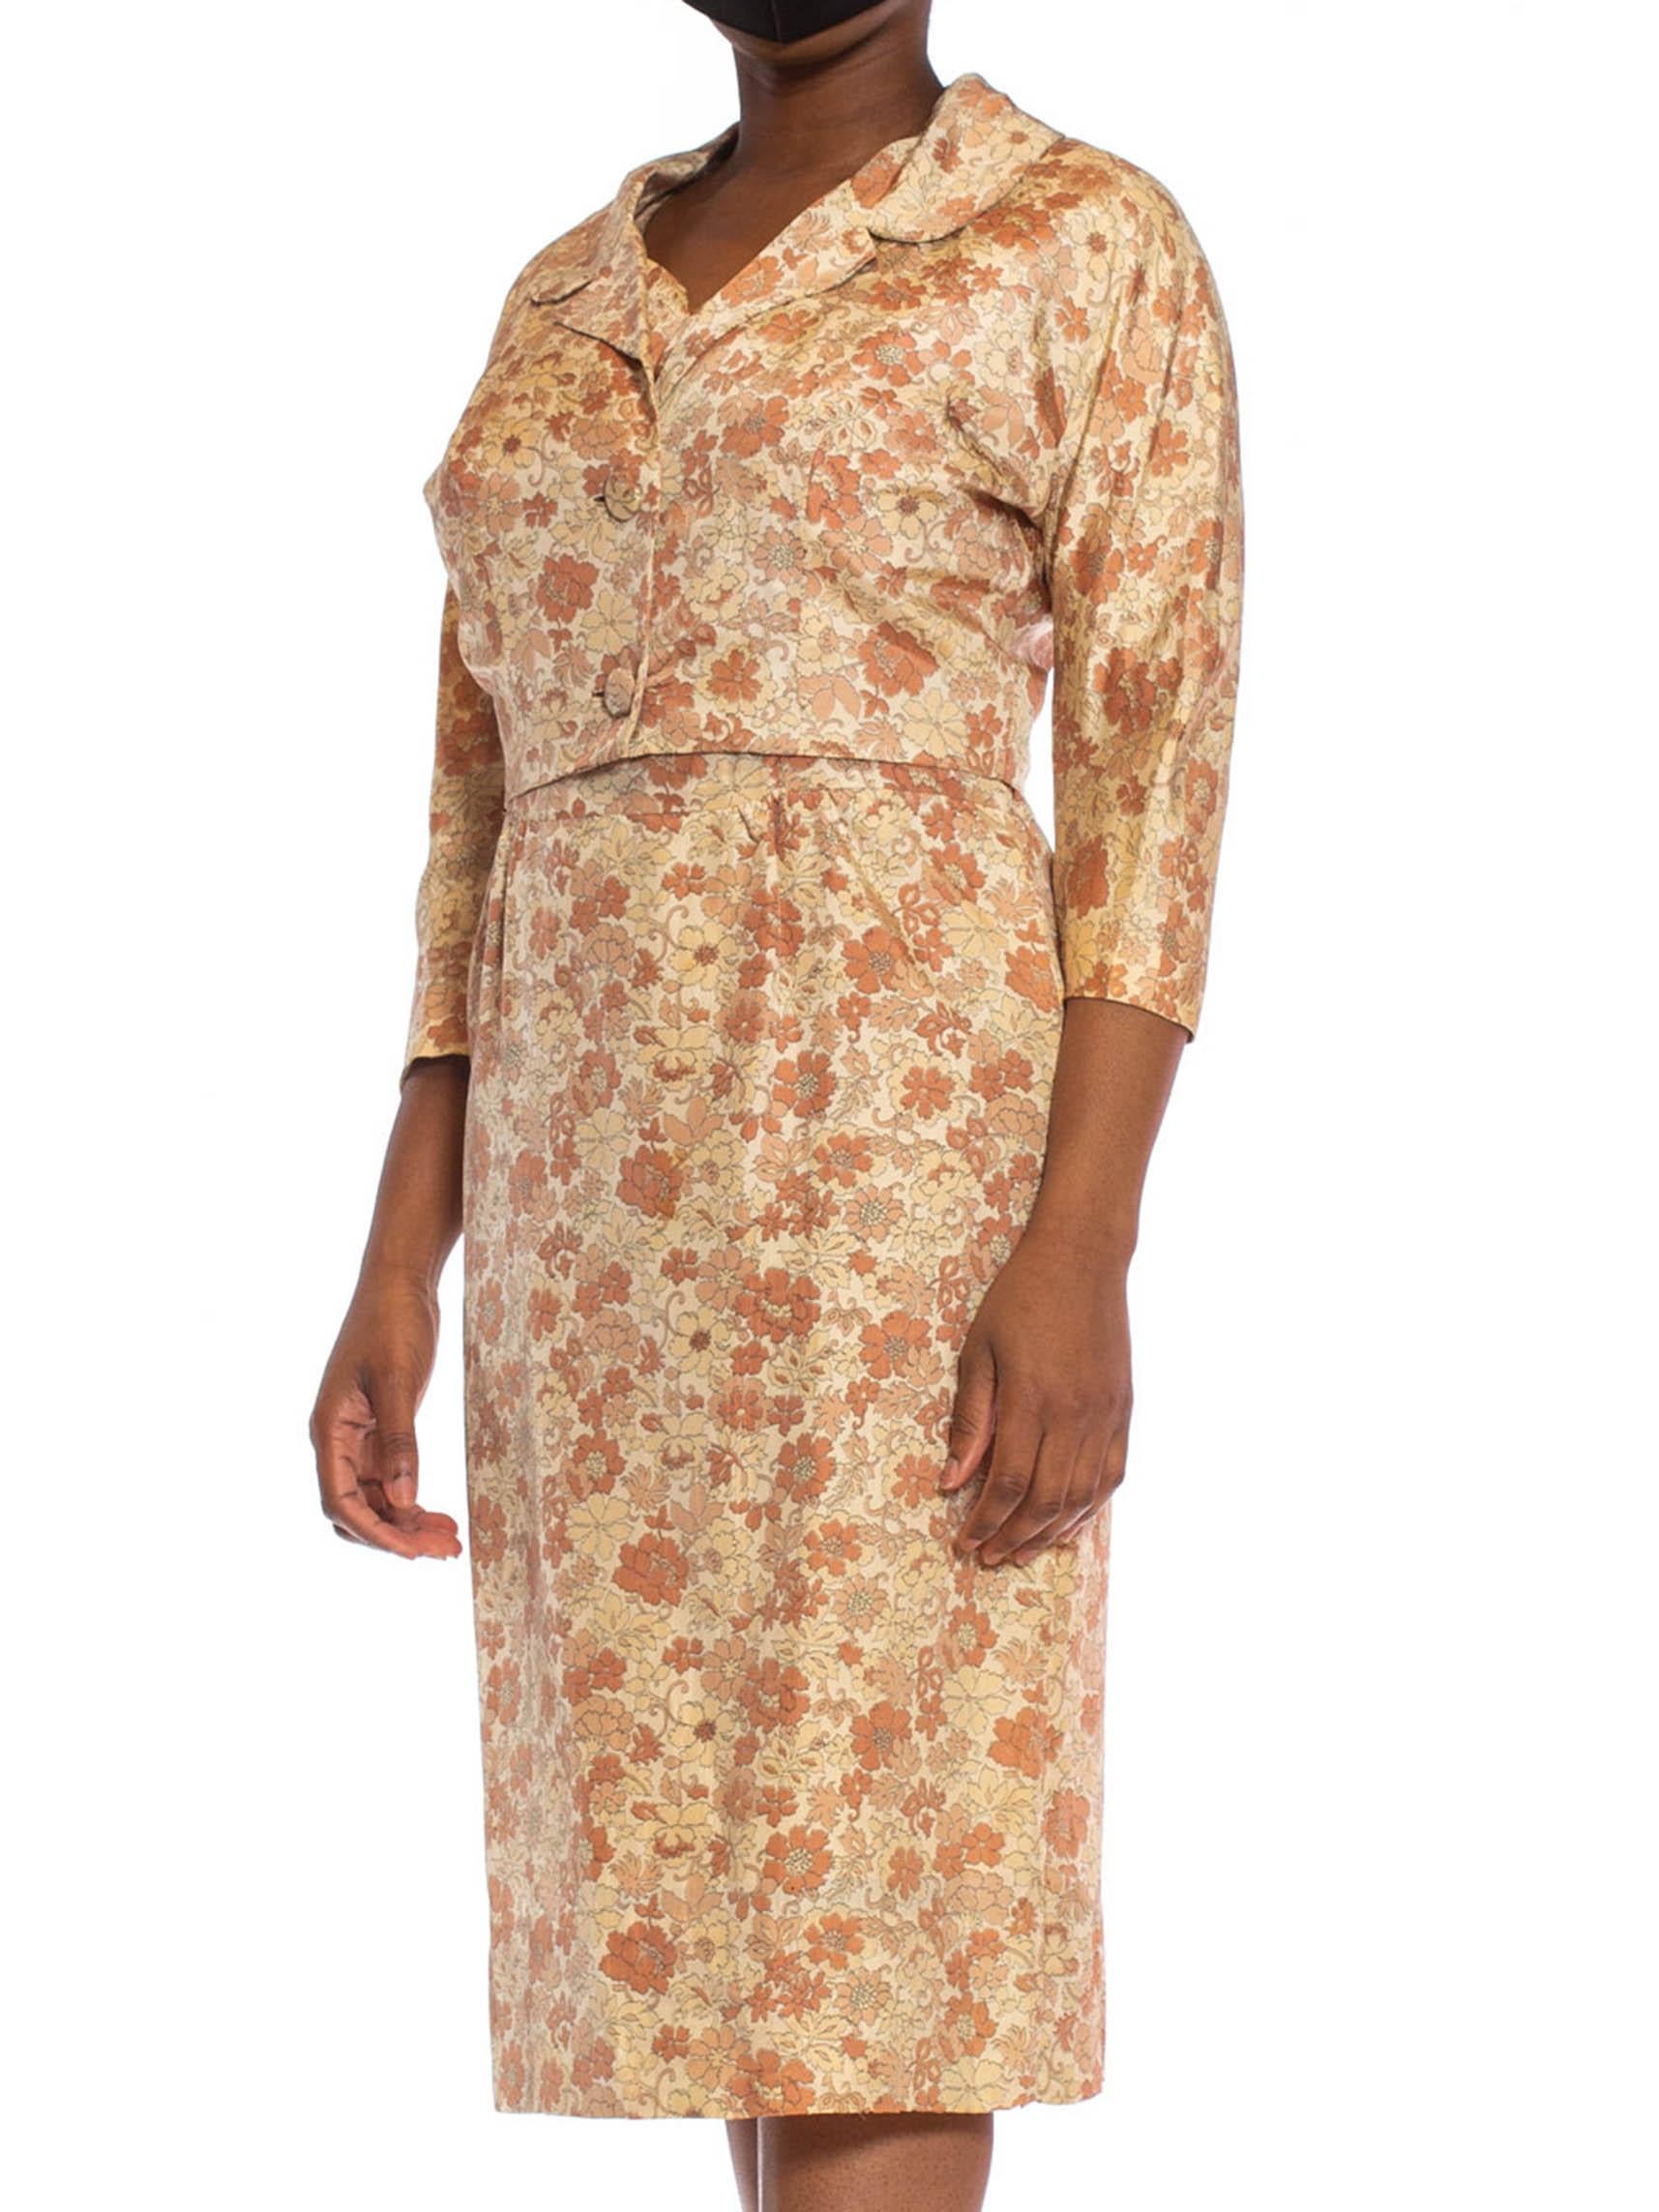 1950S Beige & Brown Silk Indian Floral Print Dress Jacket Ensemble For Sale 1